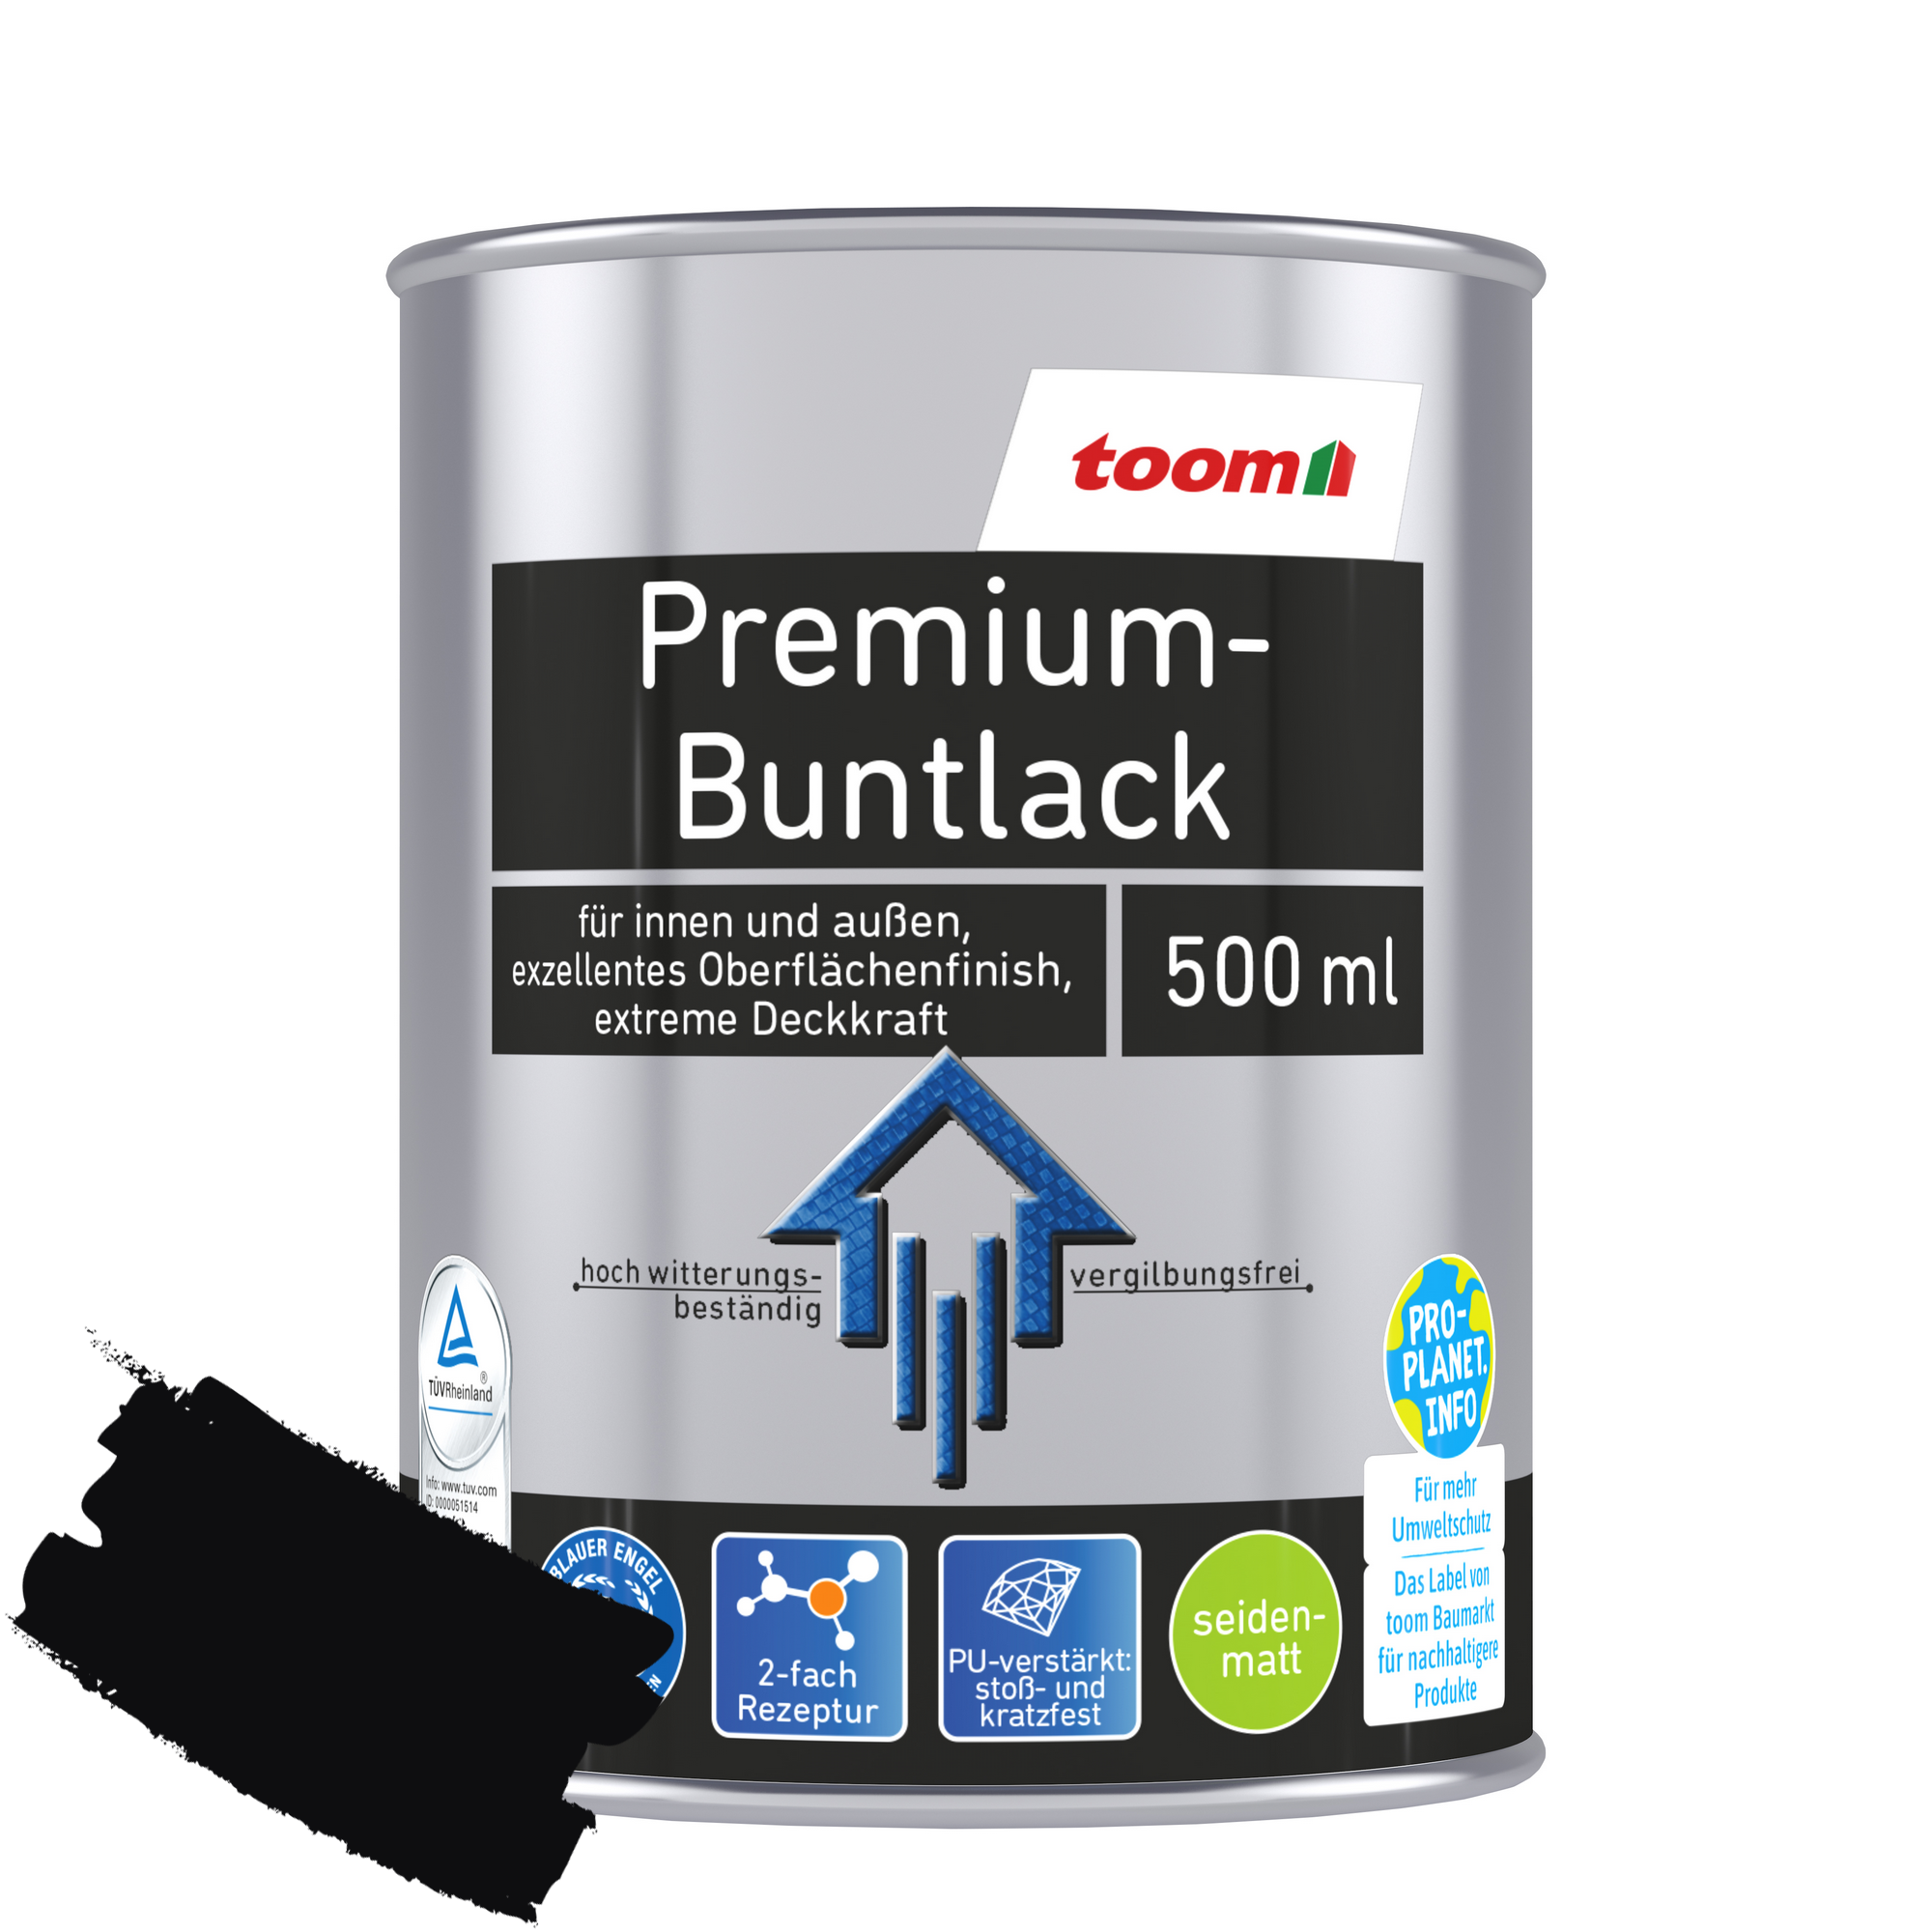 Premium-Buntlack tiefschwarz seidenmatt 500 ml + product picture